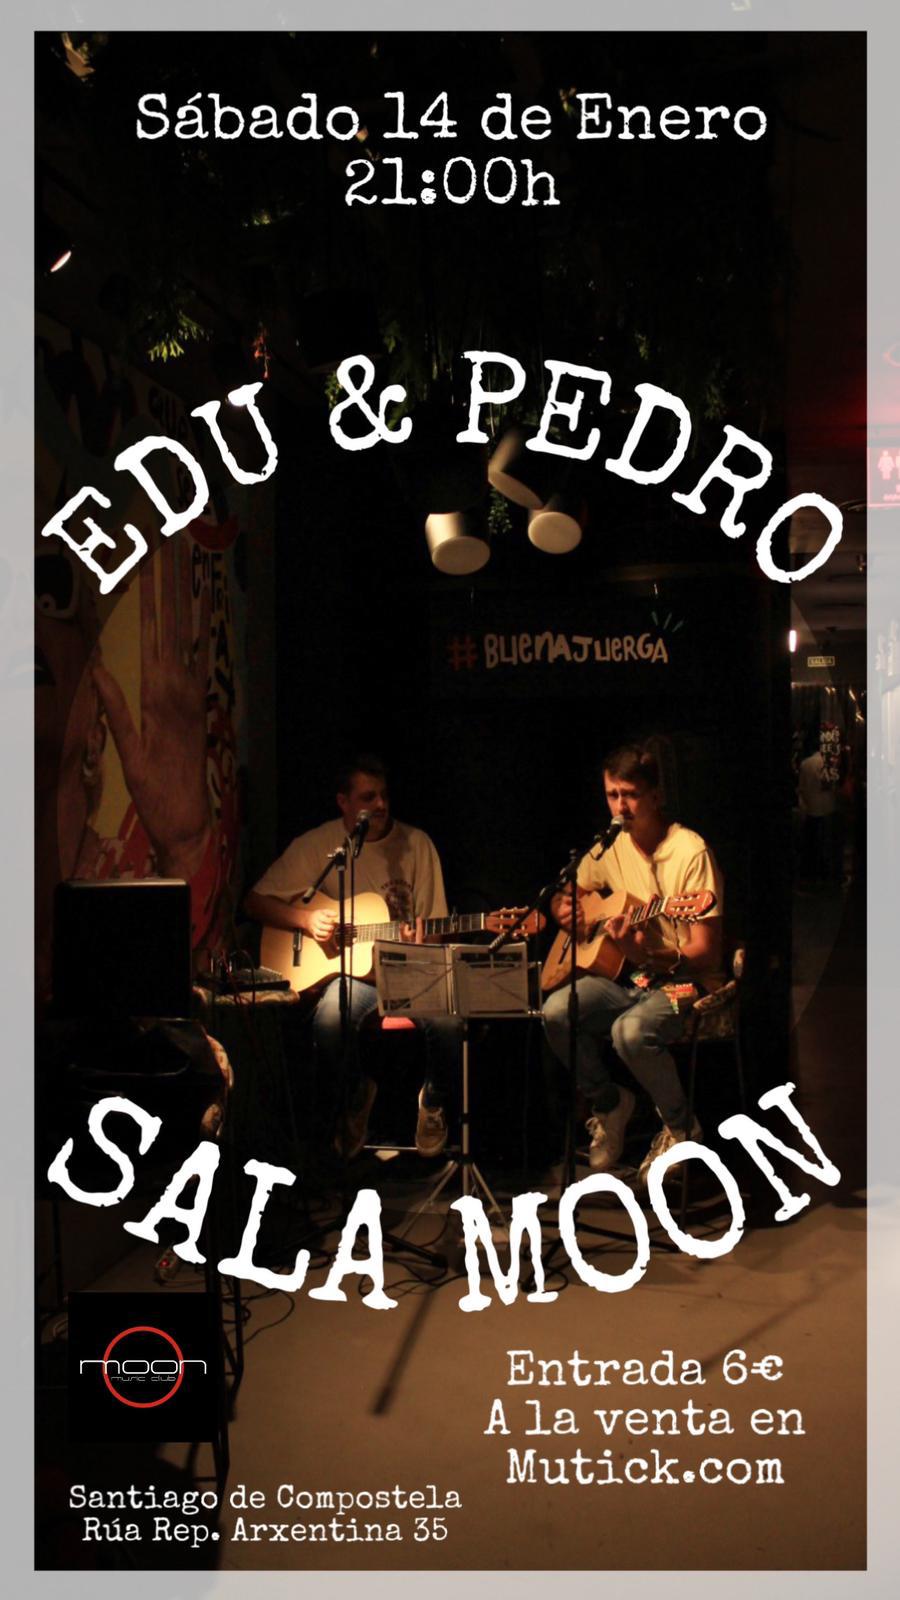 Edu & Pedro en Santiago de Compostela - Mutick